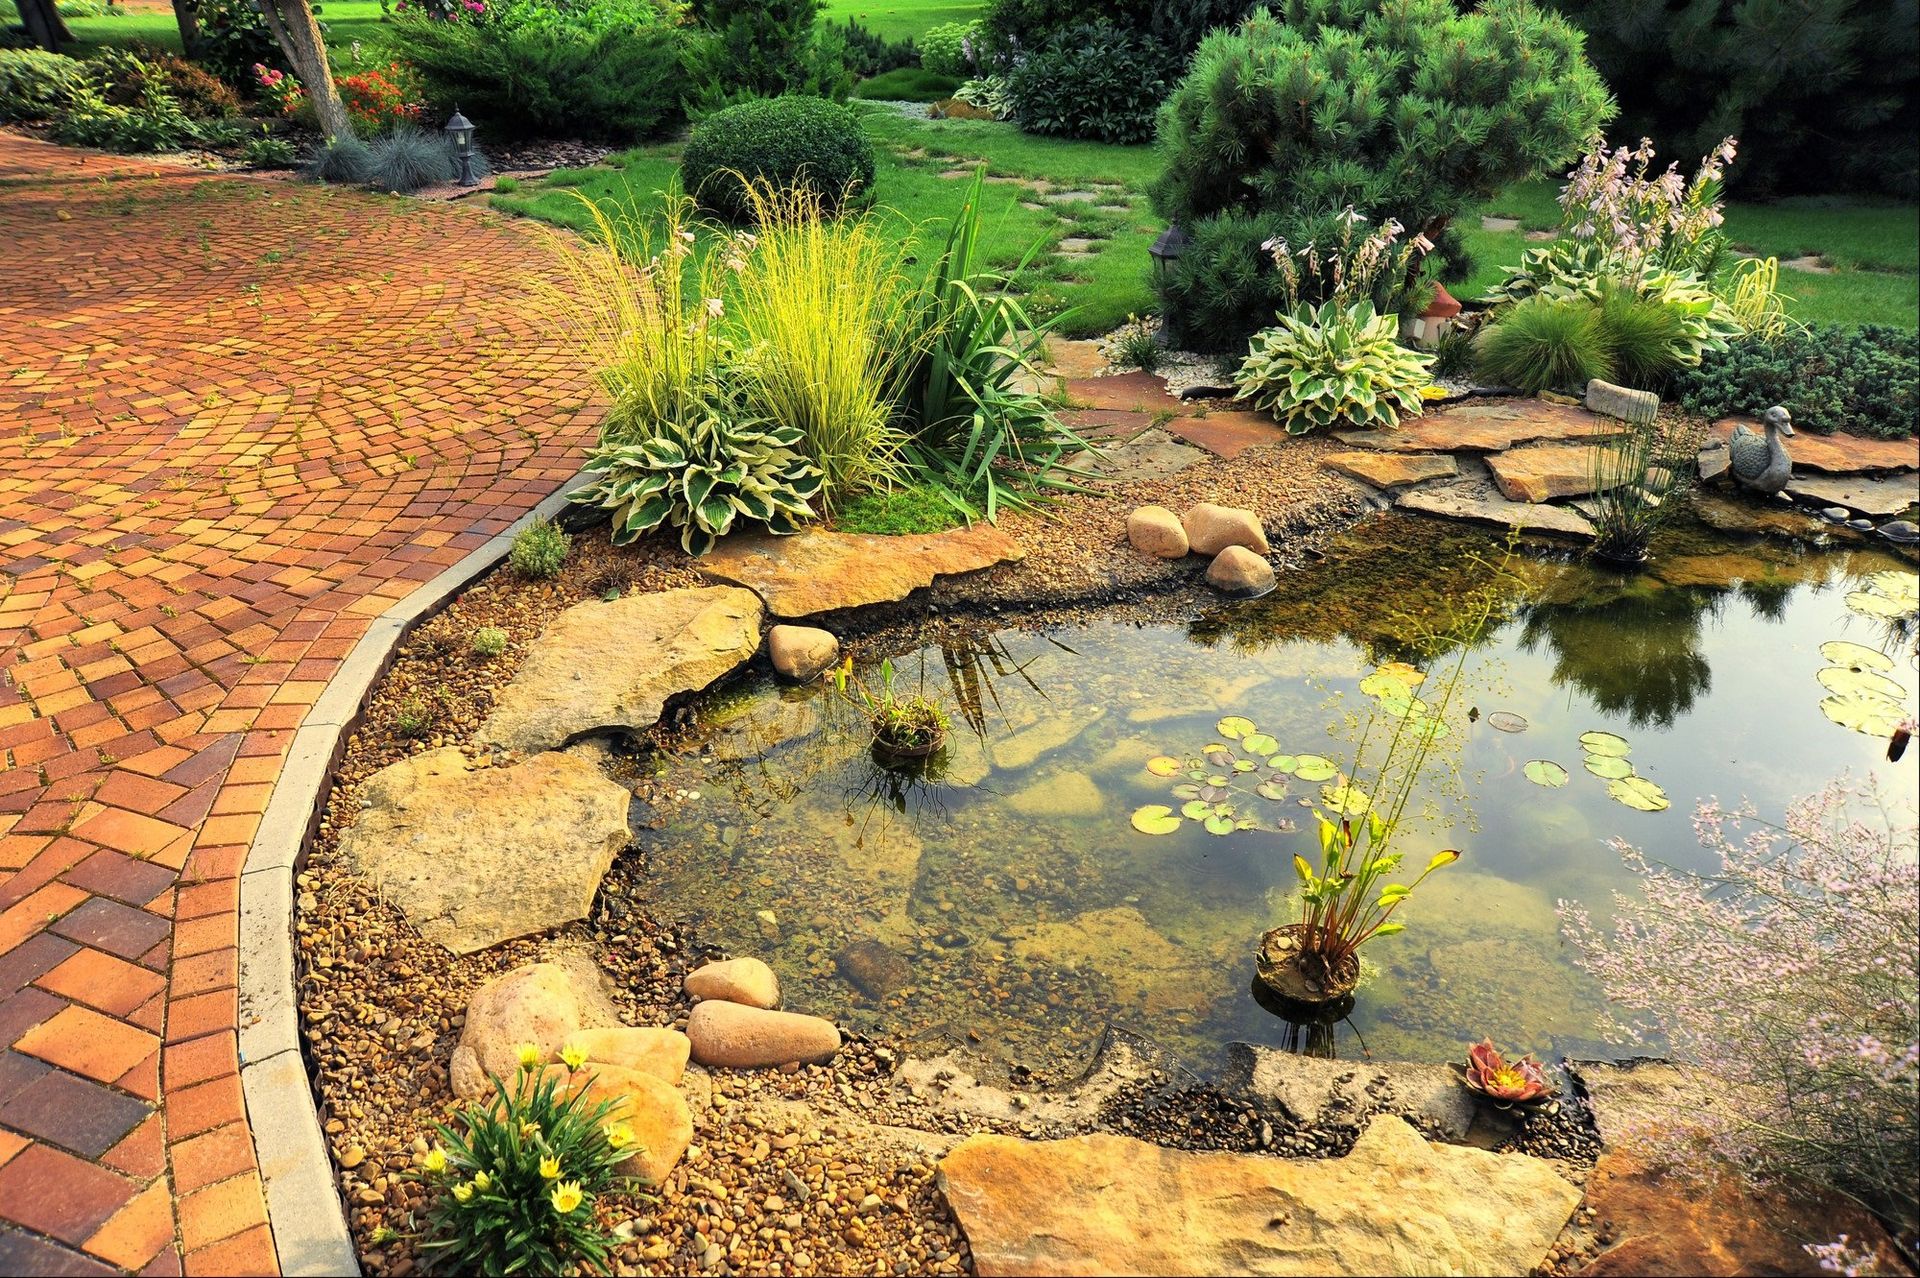 rockery style pond edging with aquatic plants